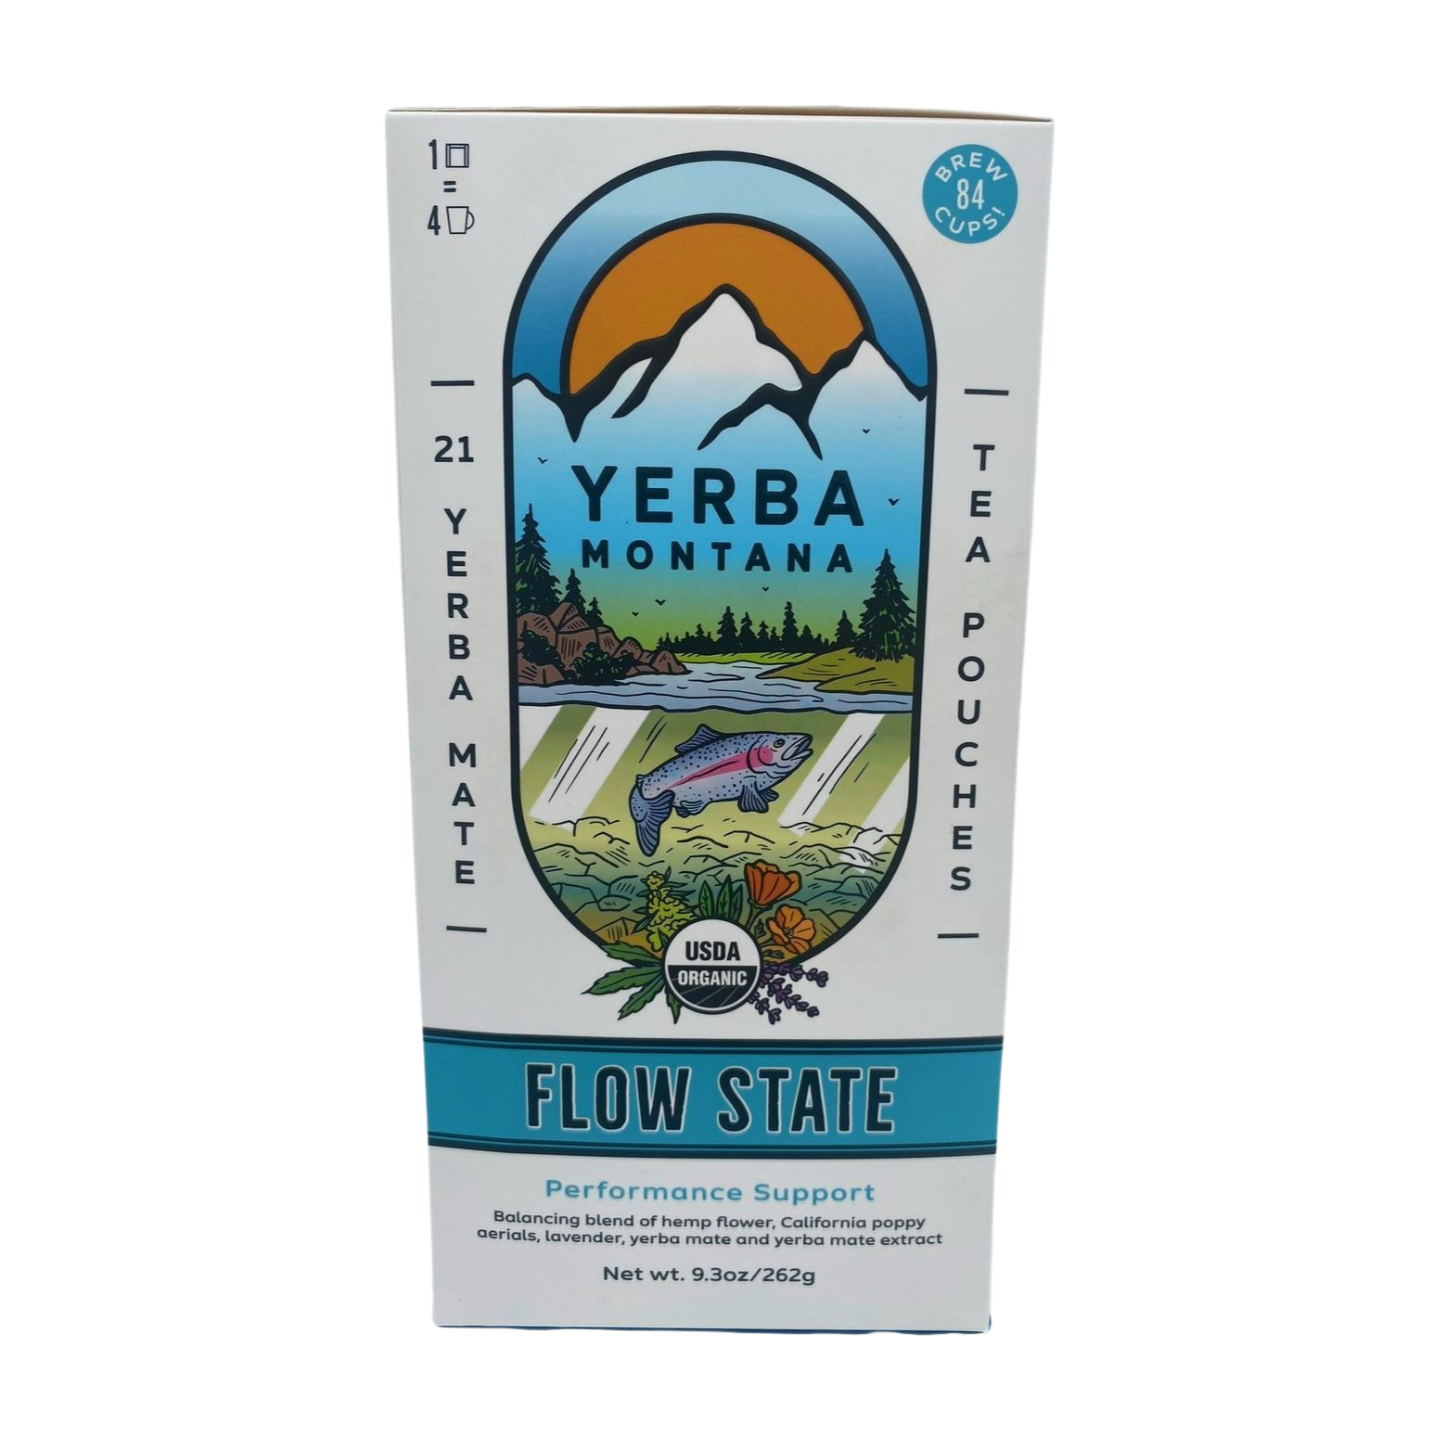 Yerba Mate tea bags with california poppy, hemp flower and lavender